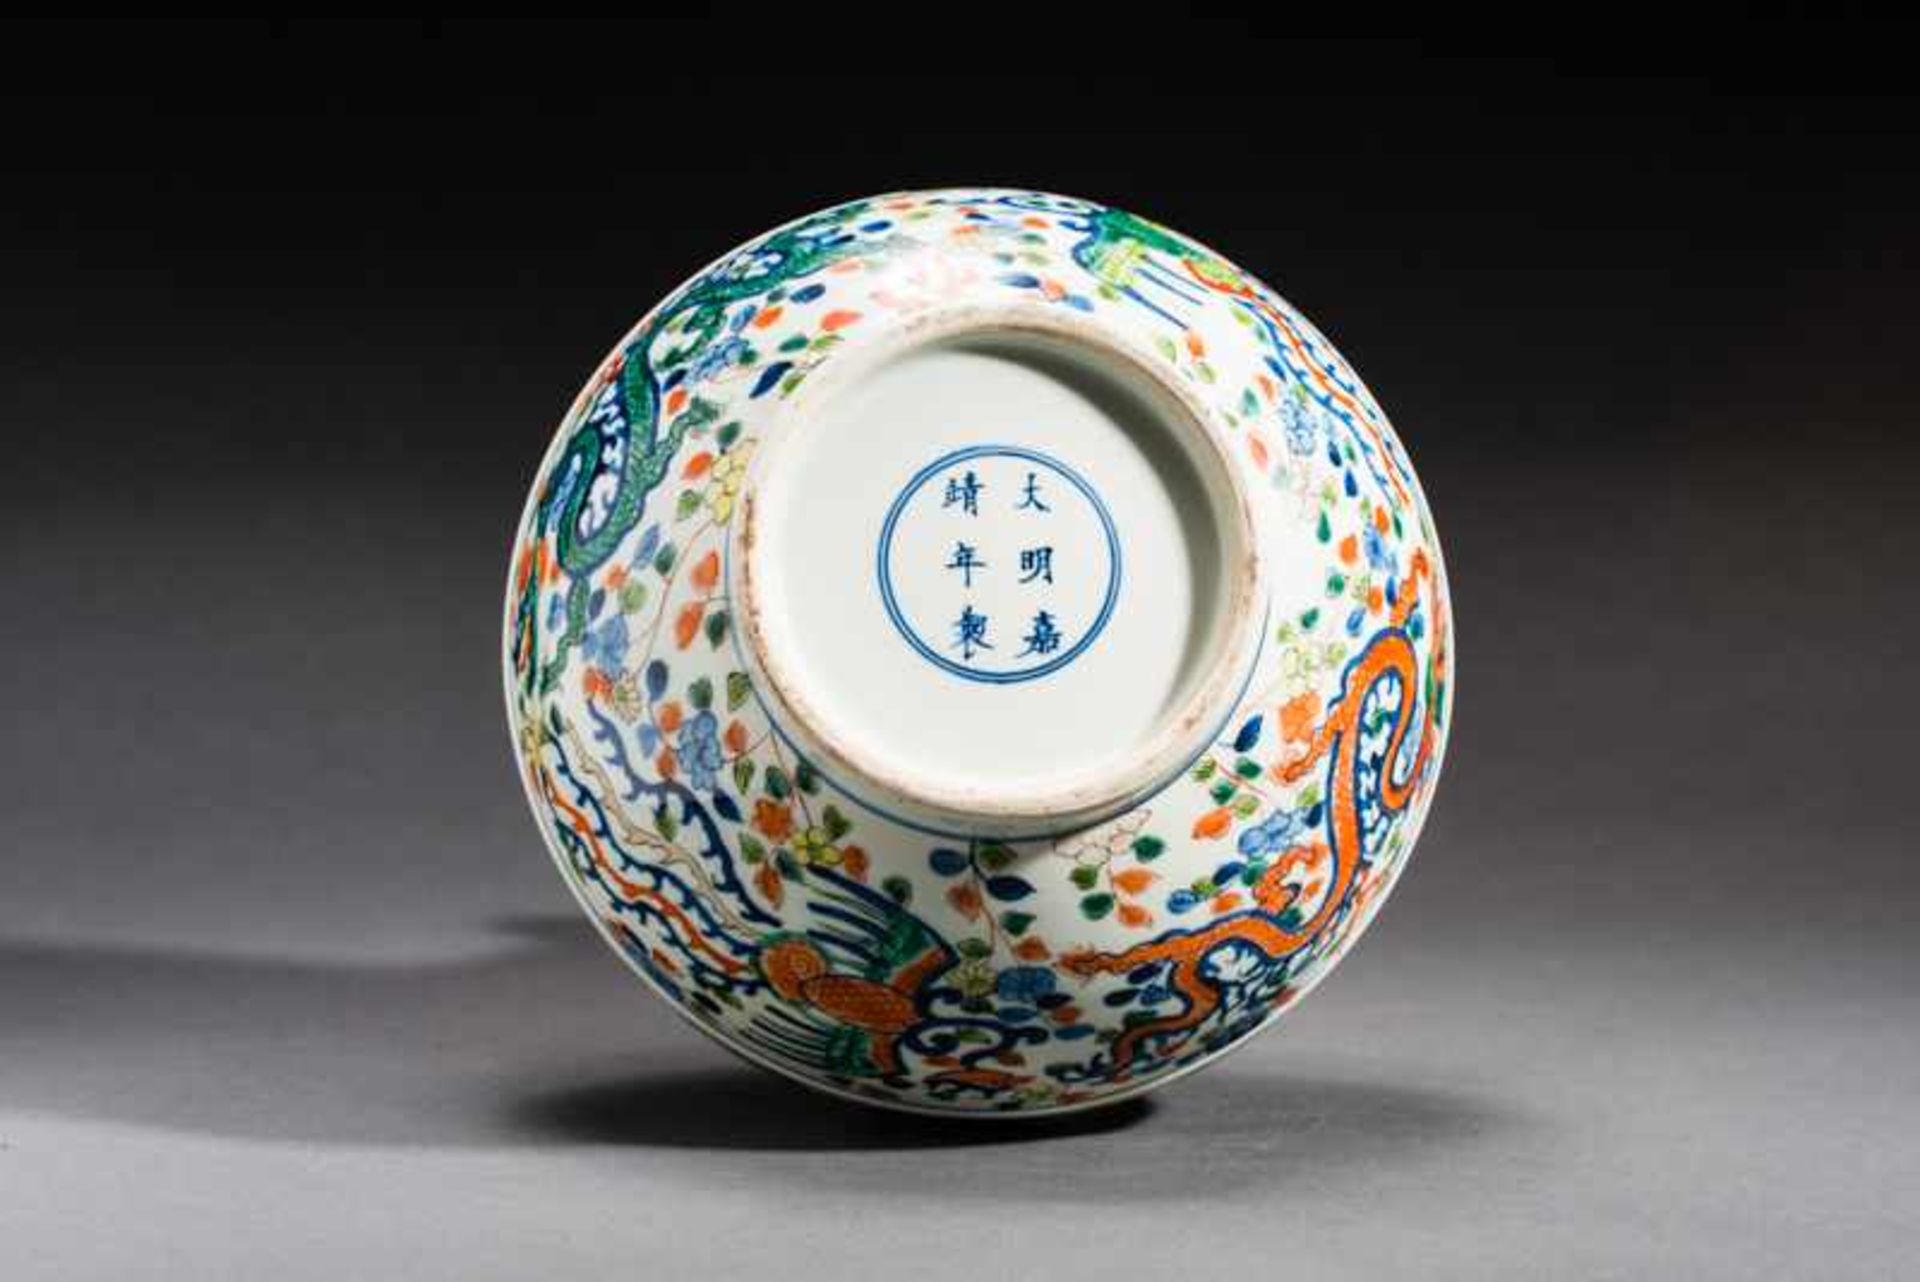 LONG-NECKED VASE WITH DRAGONS AND PHOENIX Porcelain with blue underglaze and enamel paint. China, - Image 4 of 4